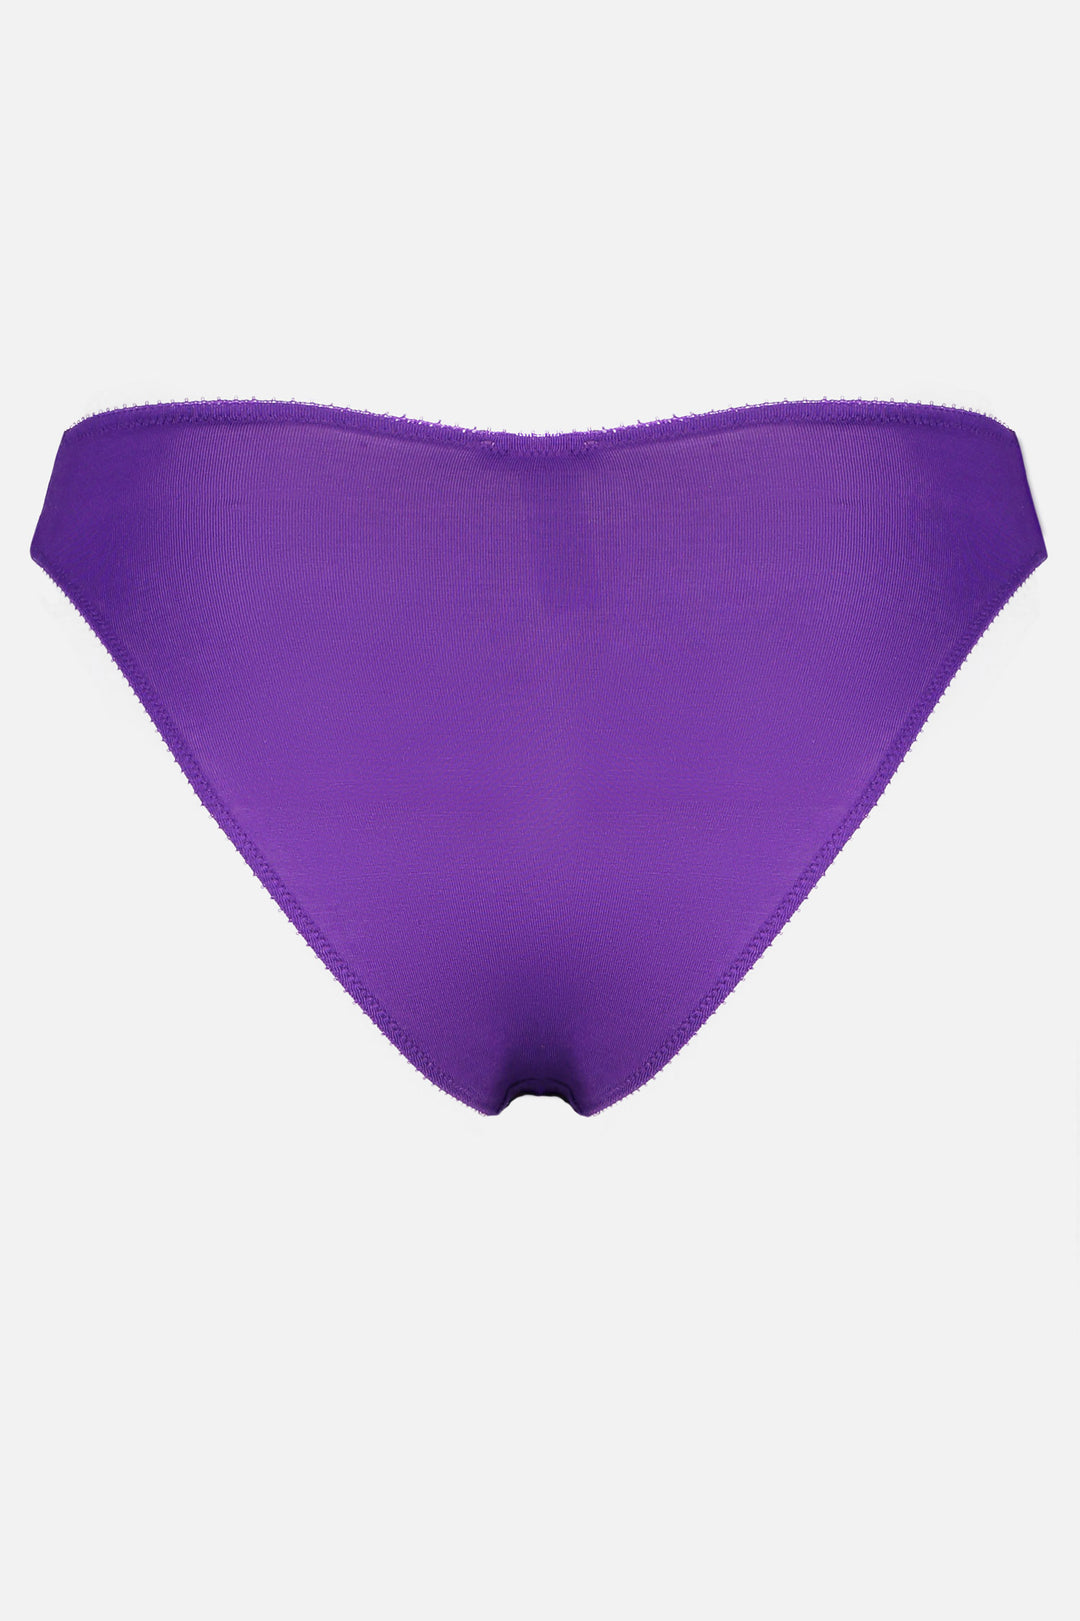 Videris Lingerie bikini knicker in purple TENCEL™  mid-rise style with cheeky bottom coverage and soft elastics